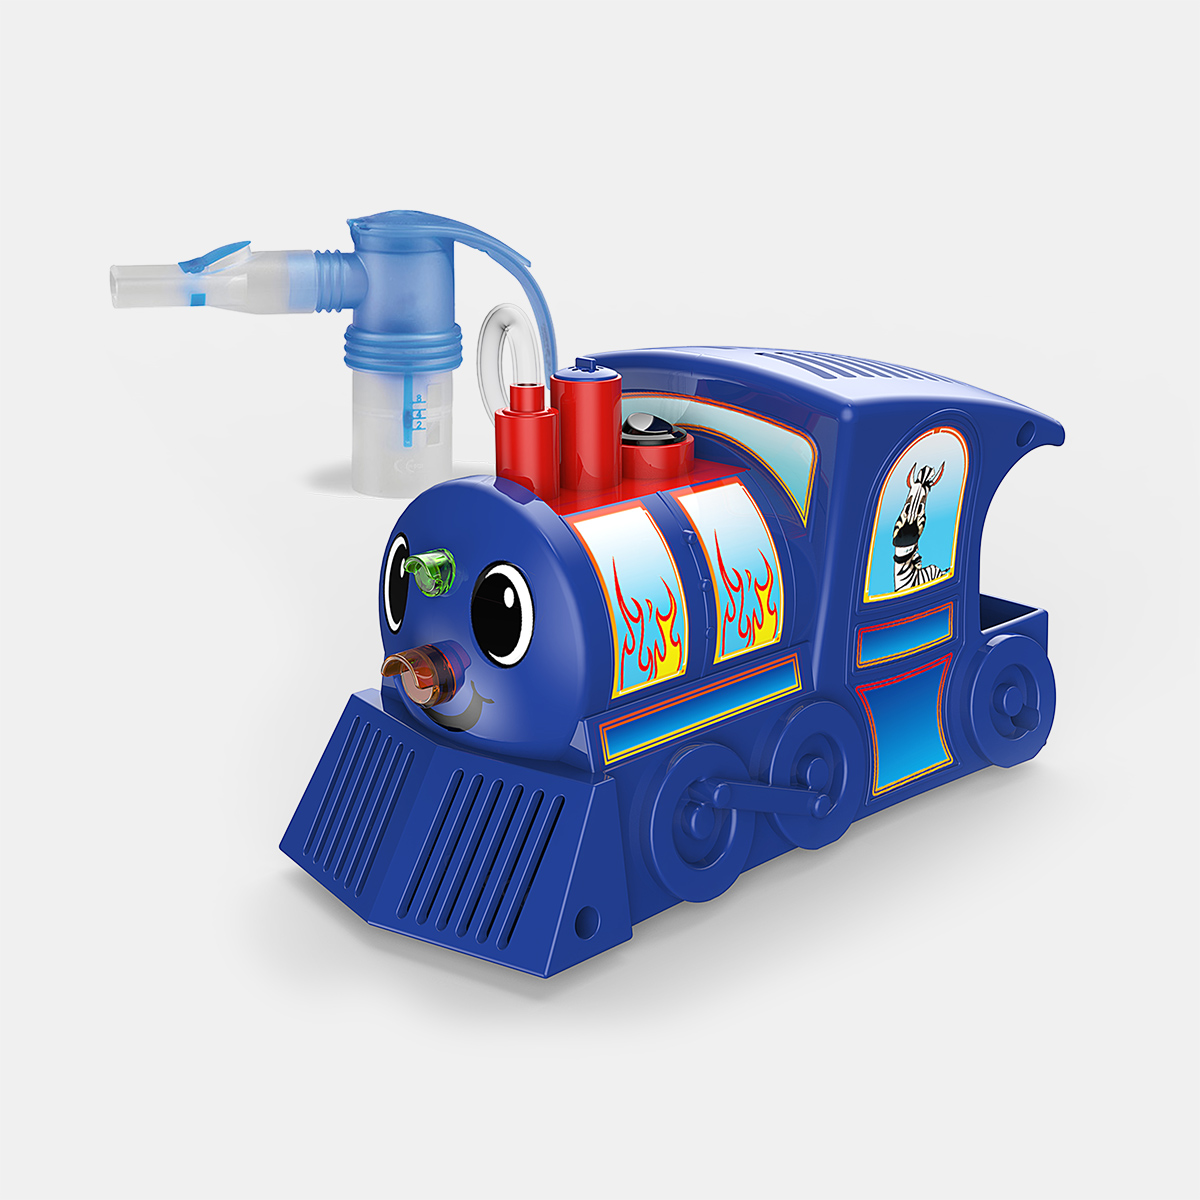 Inneal Nebulizer Compressor Compressor Baby Cartoon Thomas airson Clann